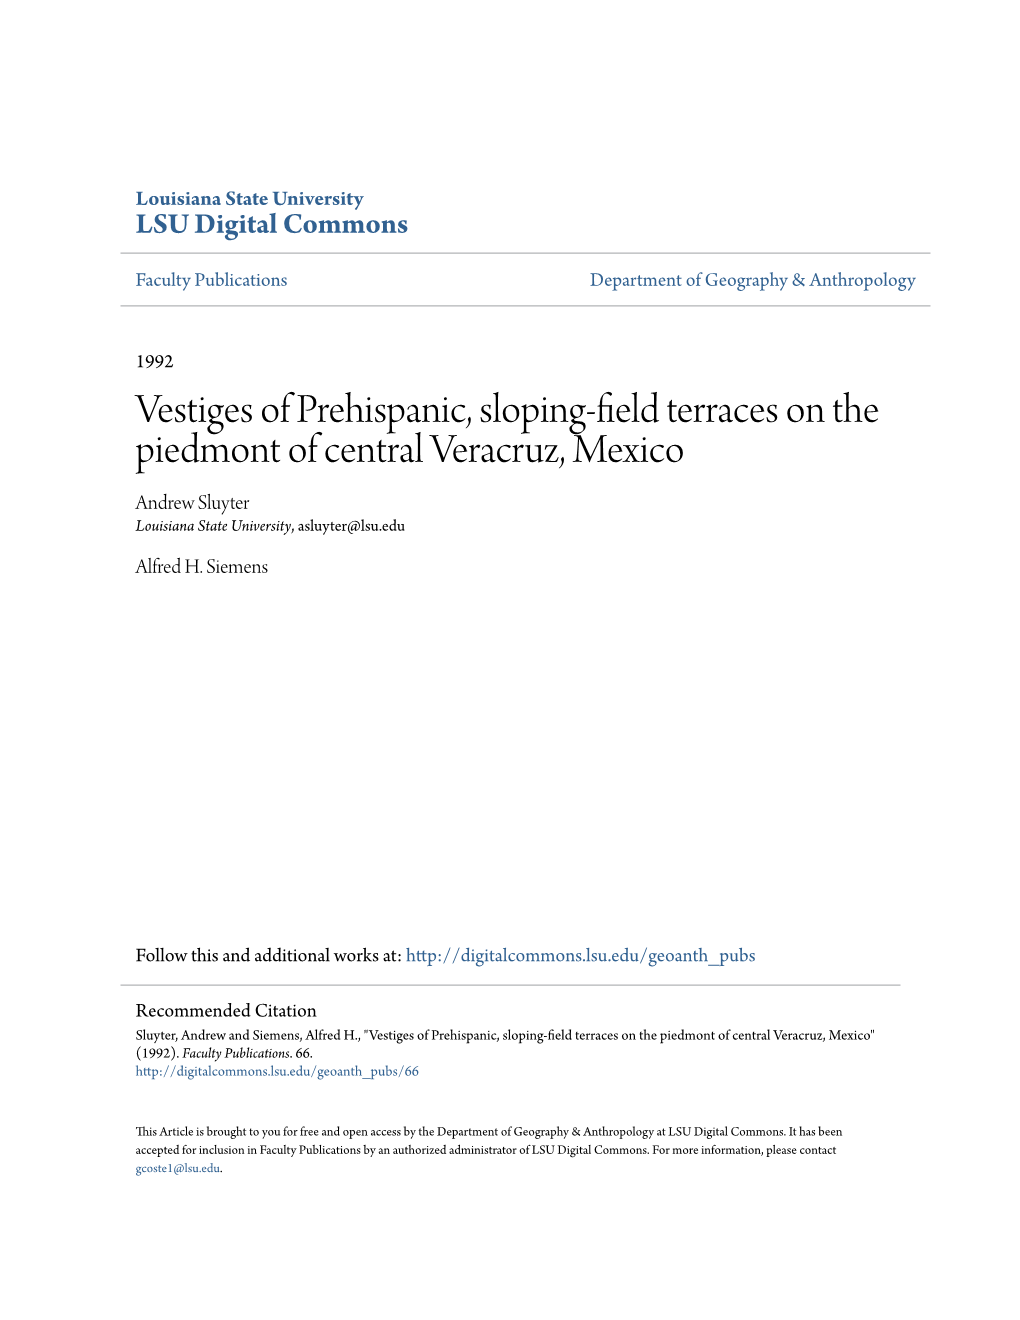 Vestiges of Prehispanic, Sloping-Field Terraces on the Piedmont of Central Veracruz, Mexico" (1992)